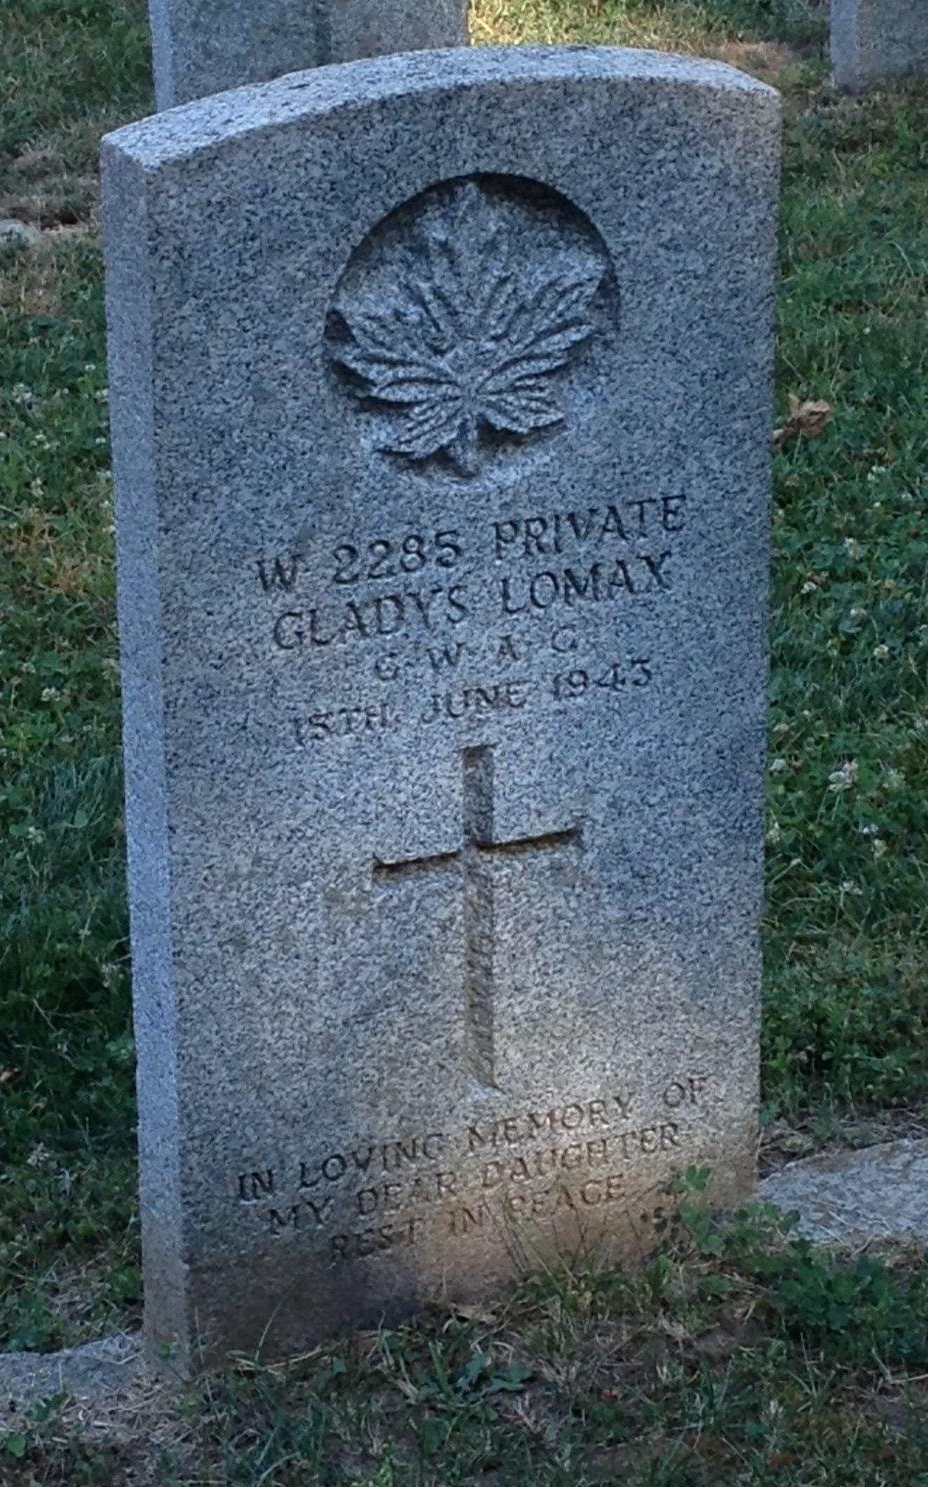 Gladys Lomax